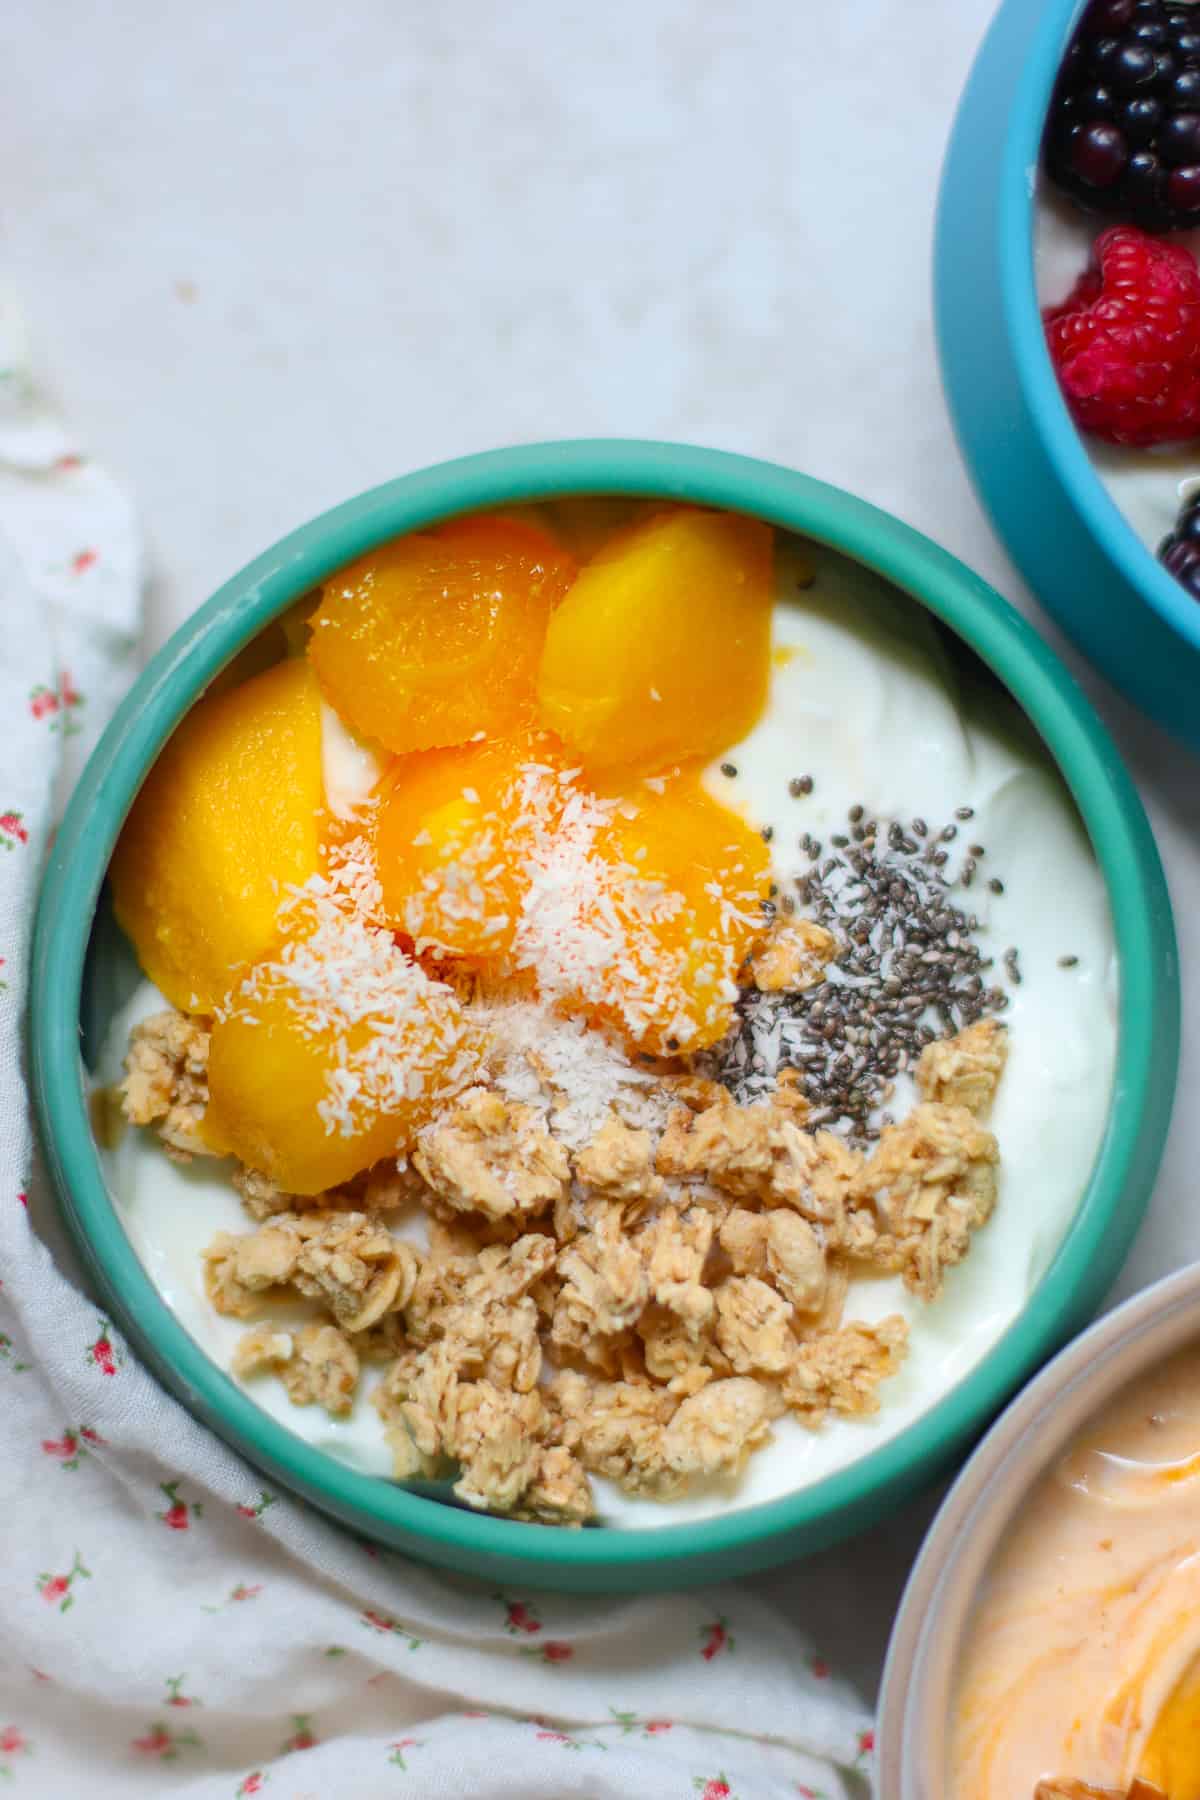 Yogurt with granola, mangoes, and chia seeds.